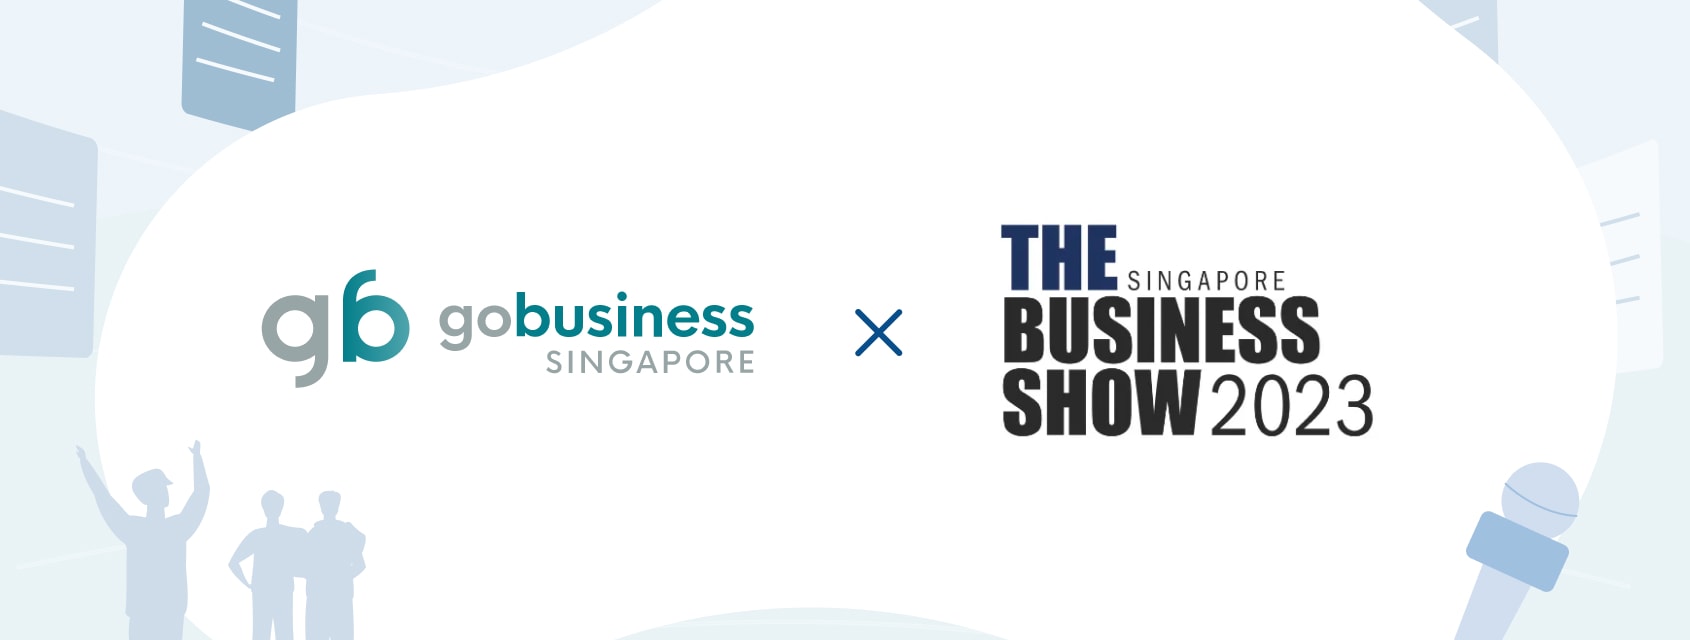 GoBusiness x The Singapore Business Show 2023